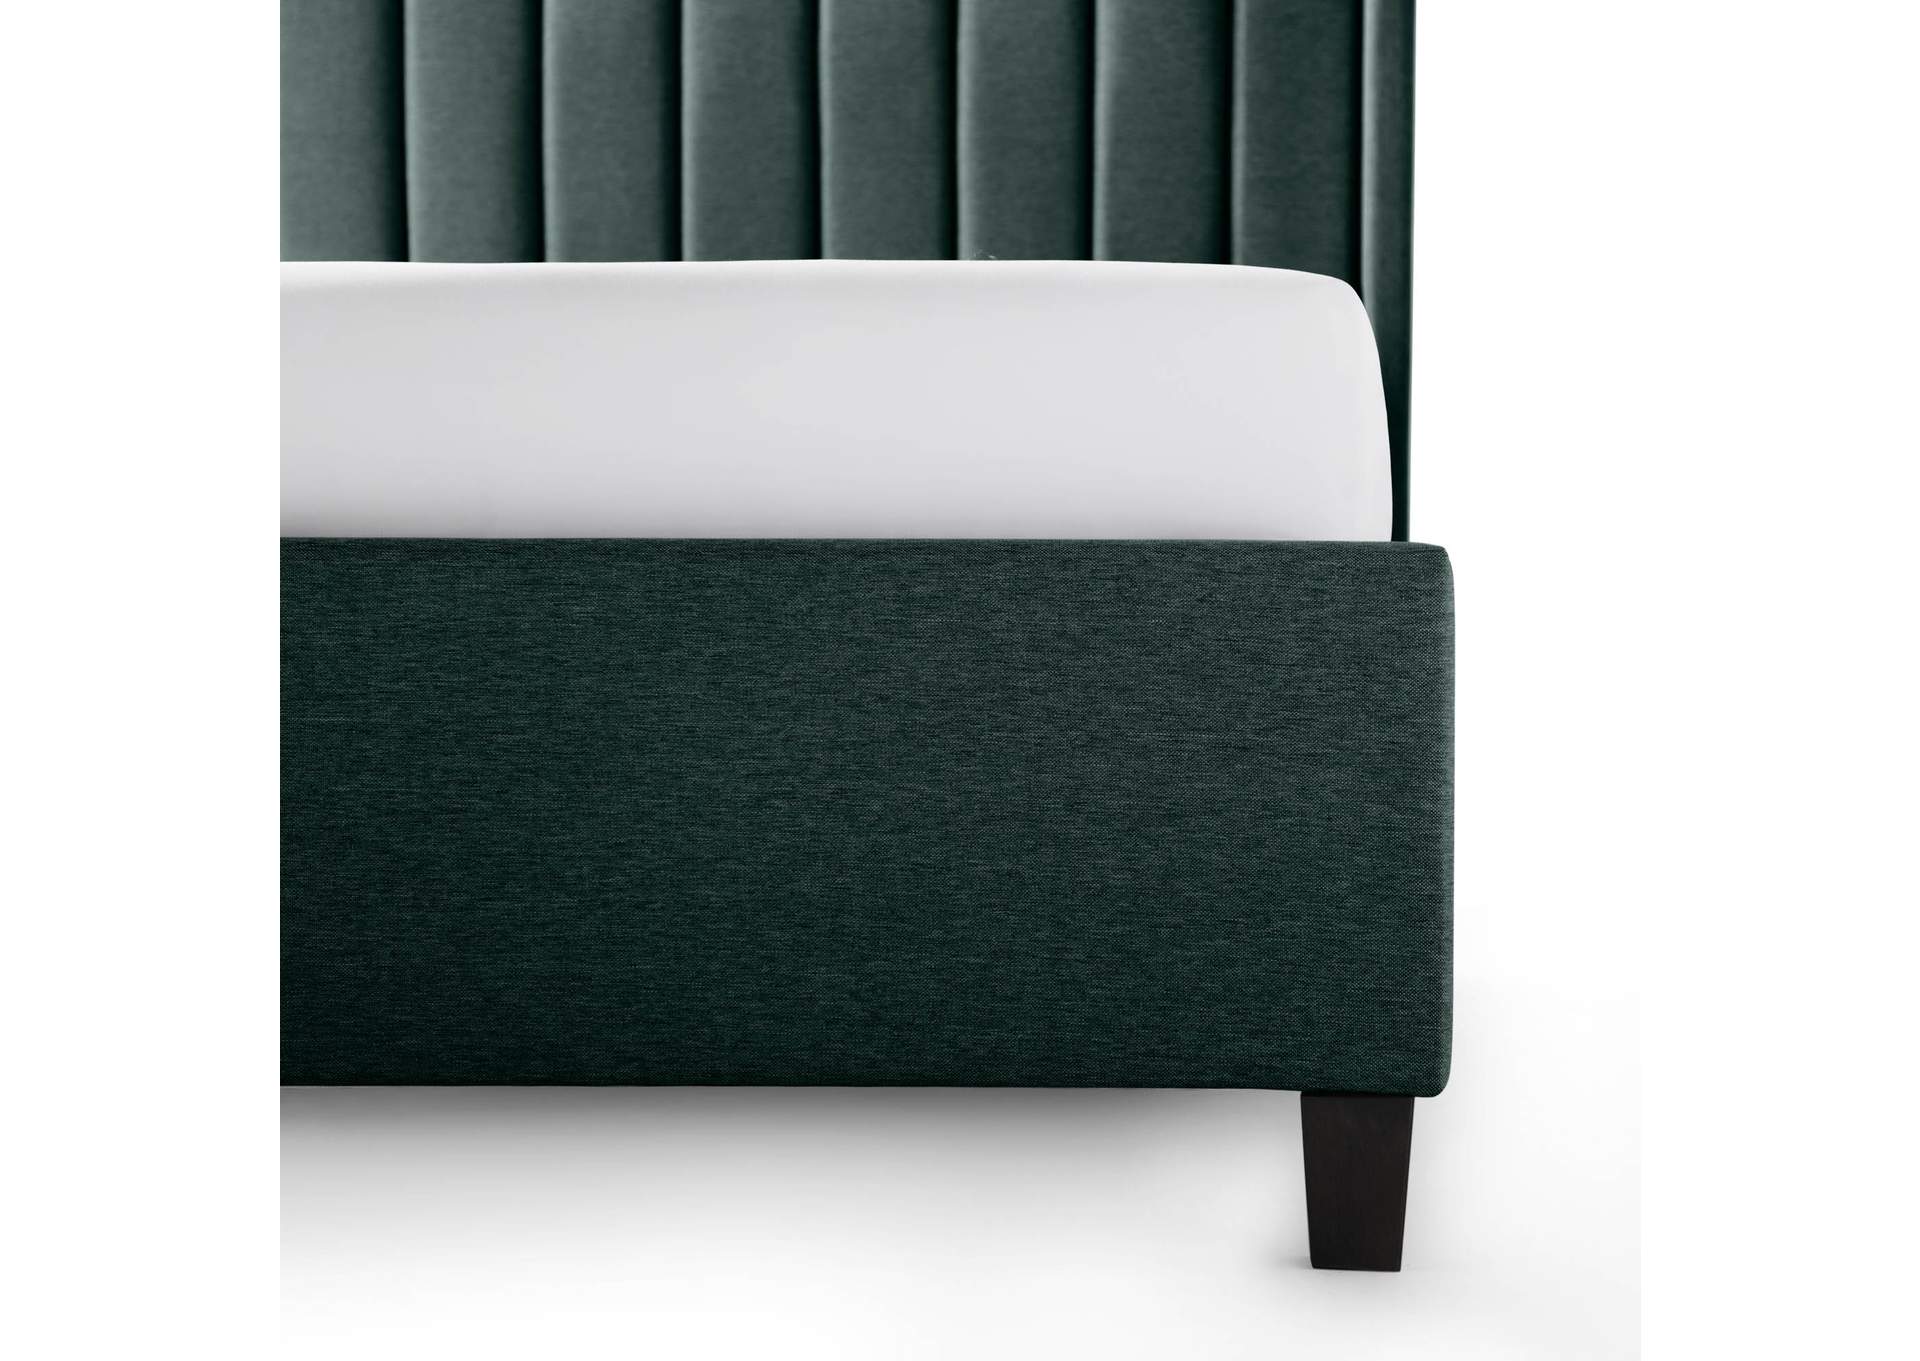 Malouf Oat Blackwell Upholstered Bed w/ Wingback Headboard - Full Size,Malouf